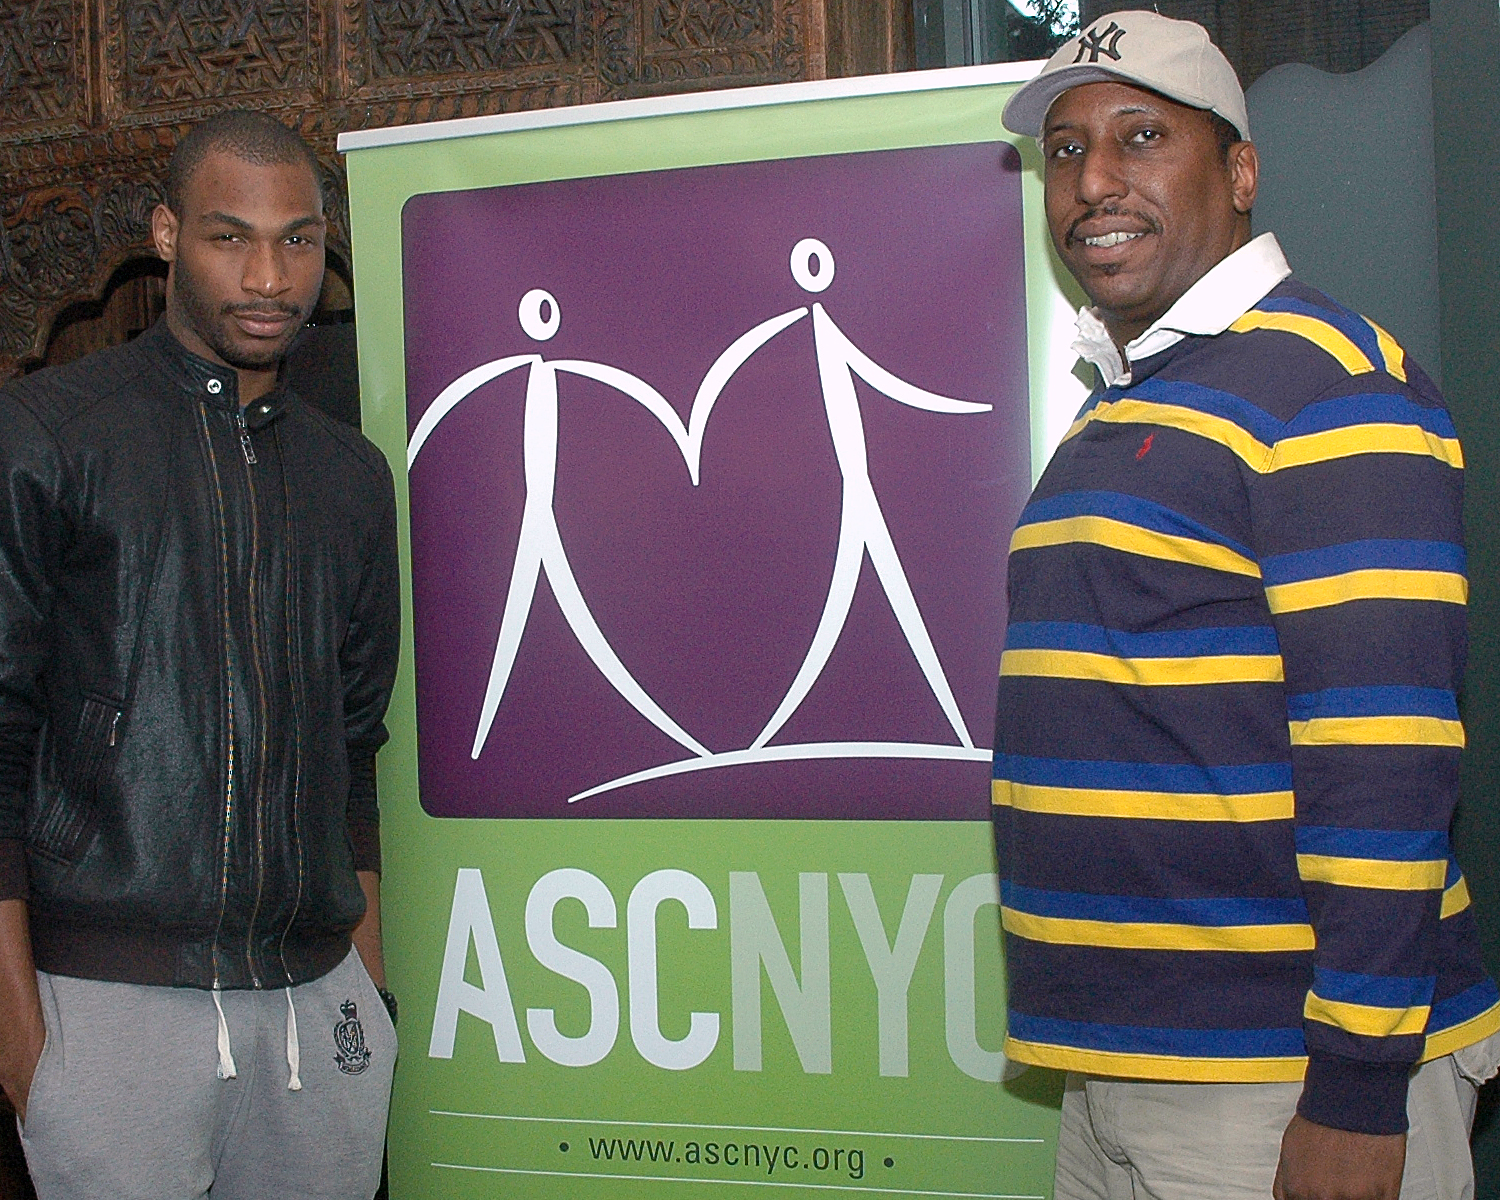 ASCNYC Volunteers Bryan S. and Chris B.